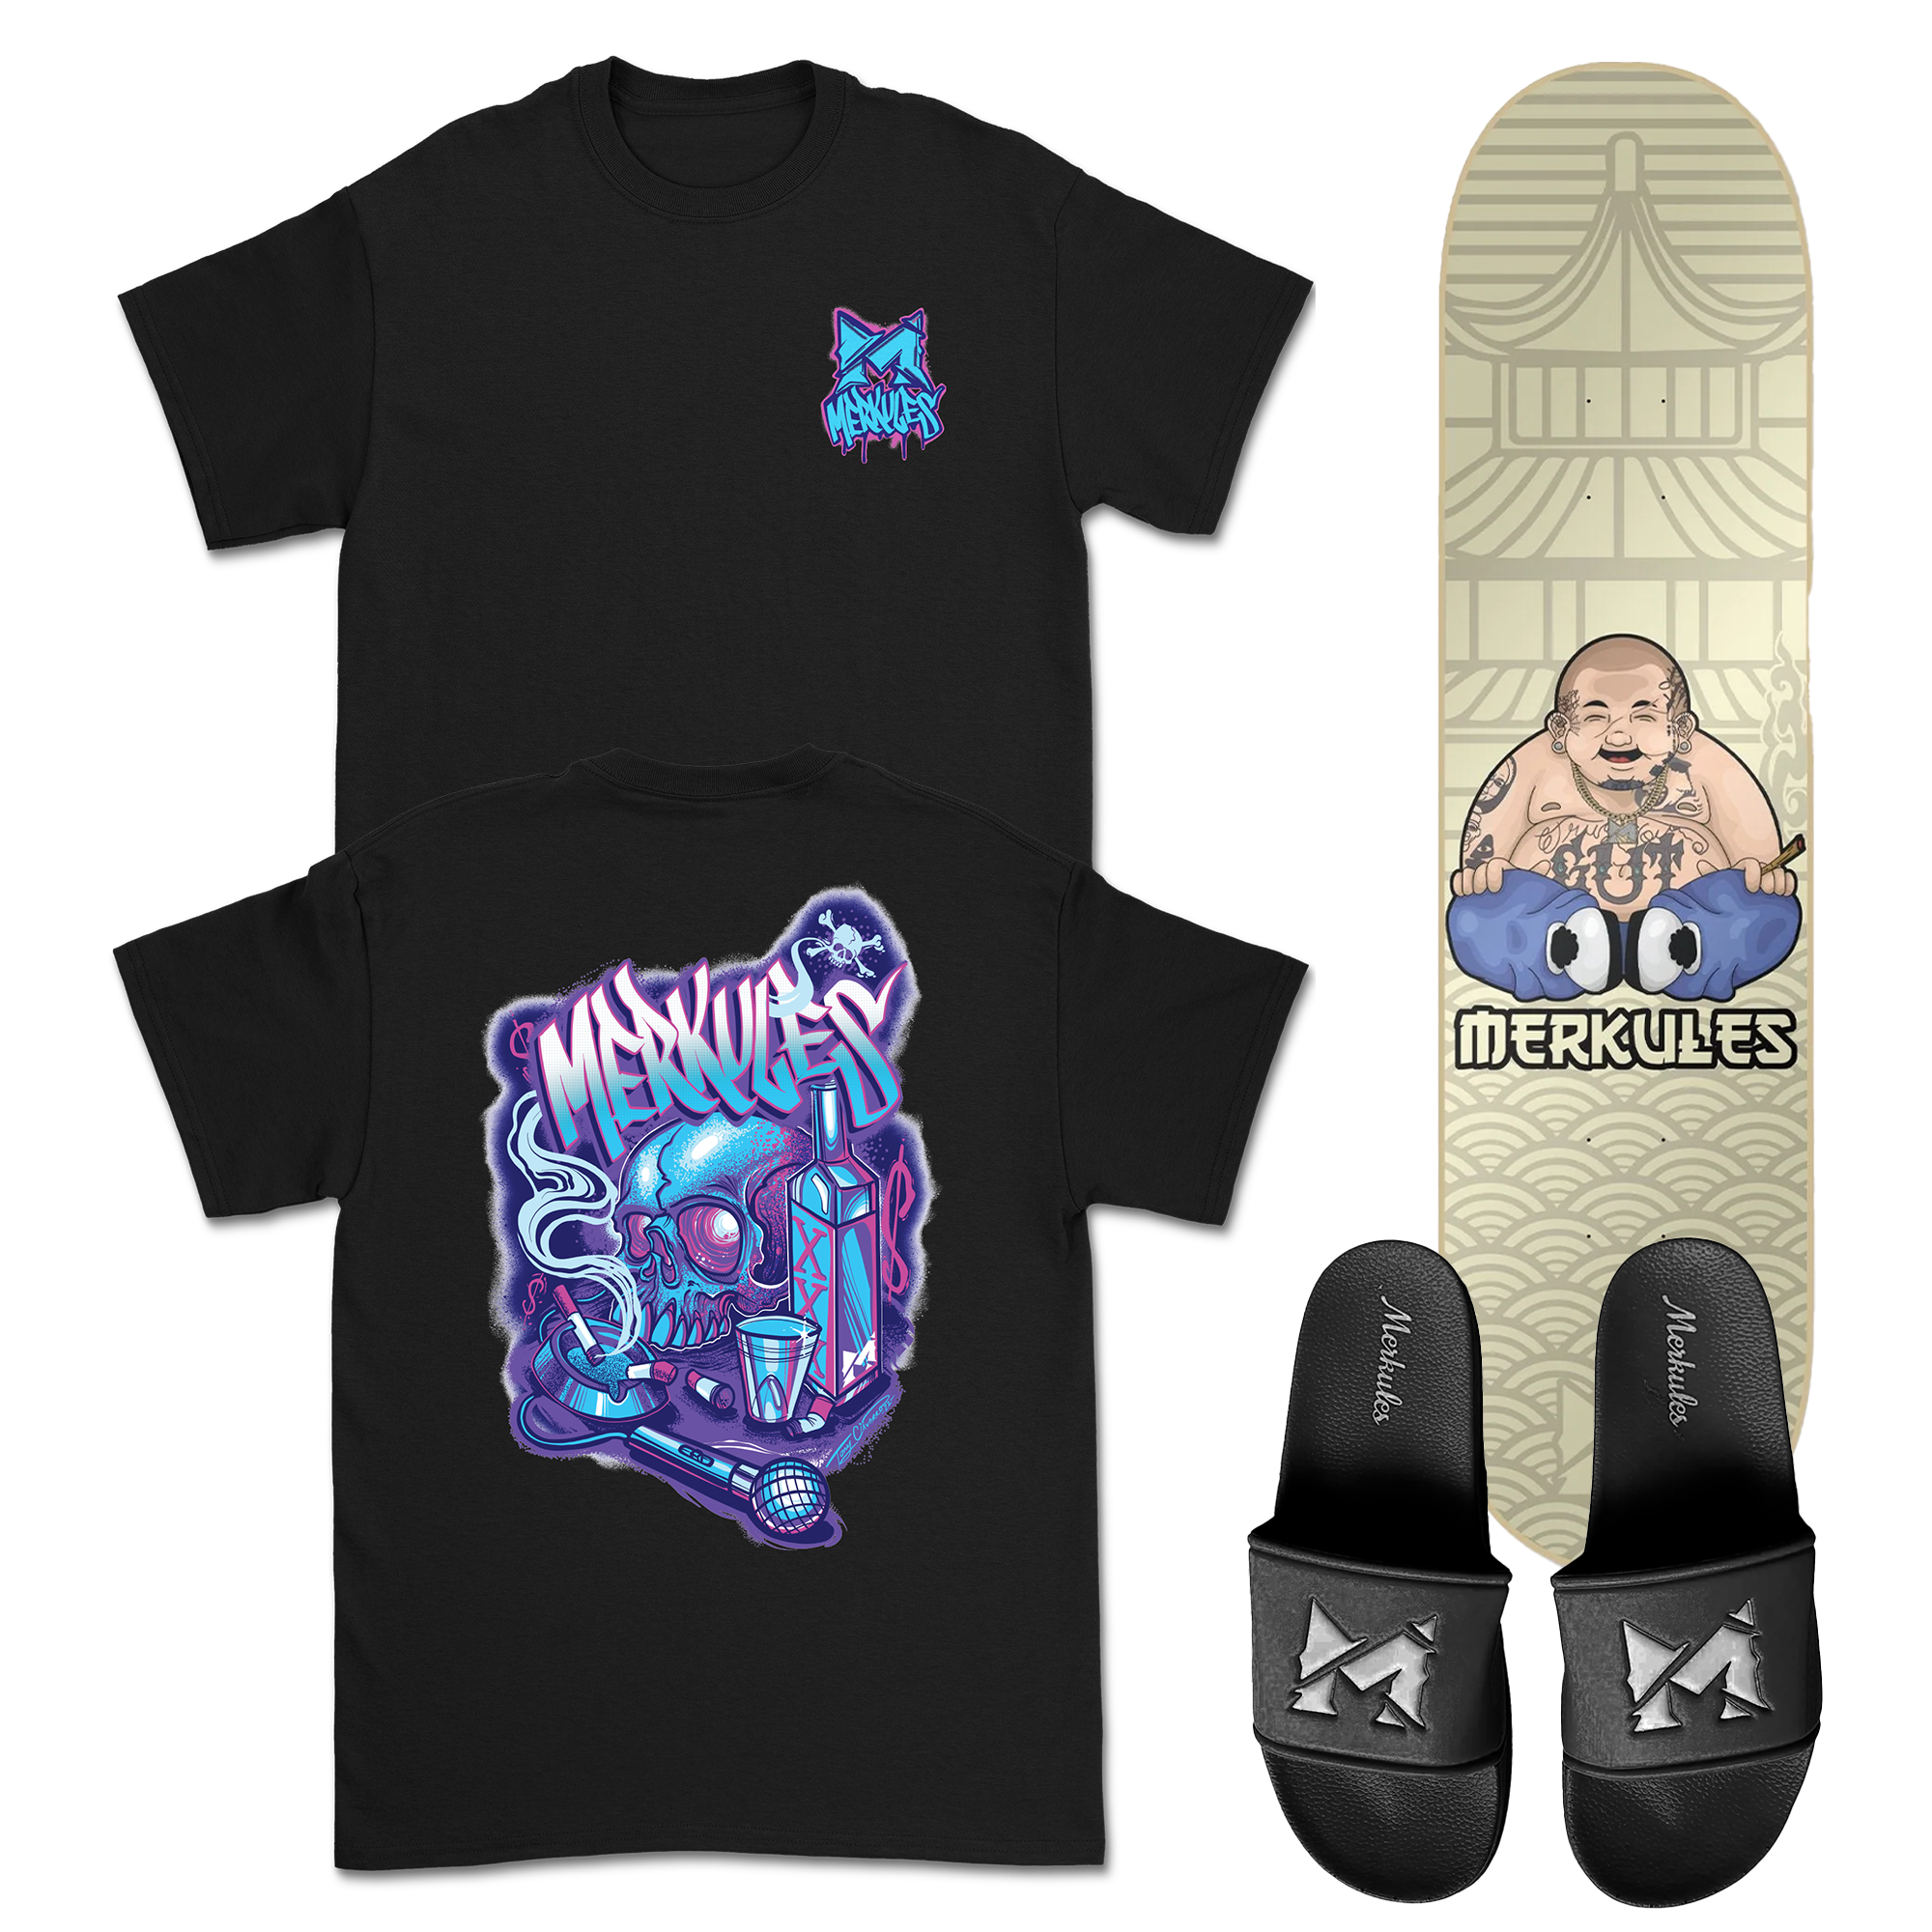 Merkules - Skate Deck + T-Shirt + Black Slides Bundle